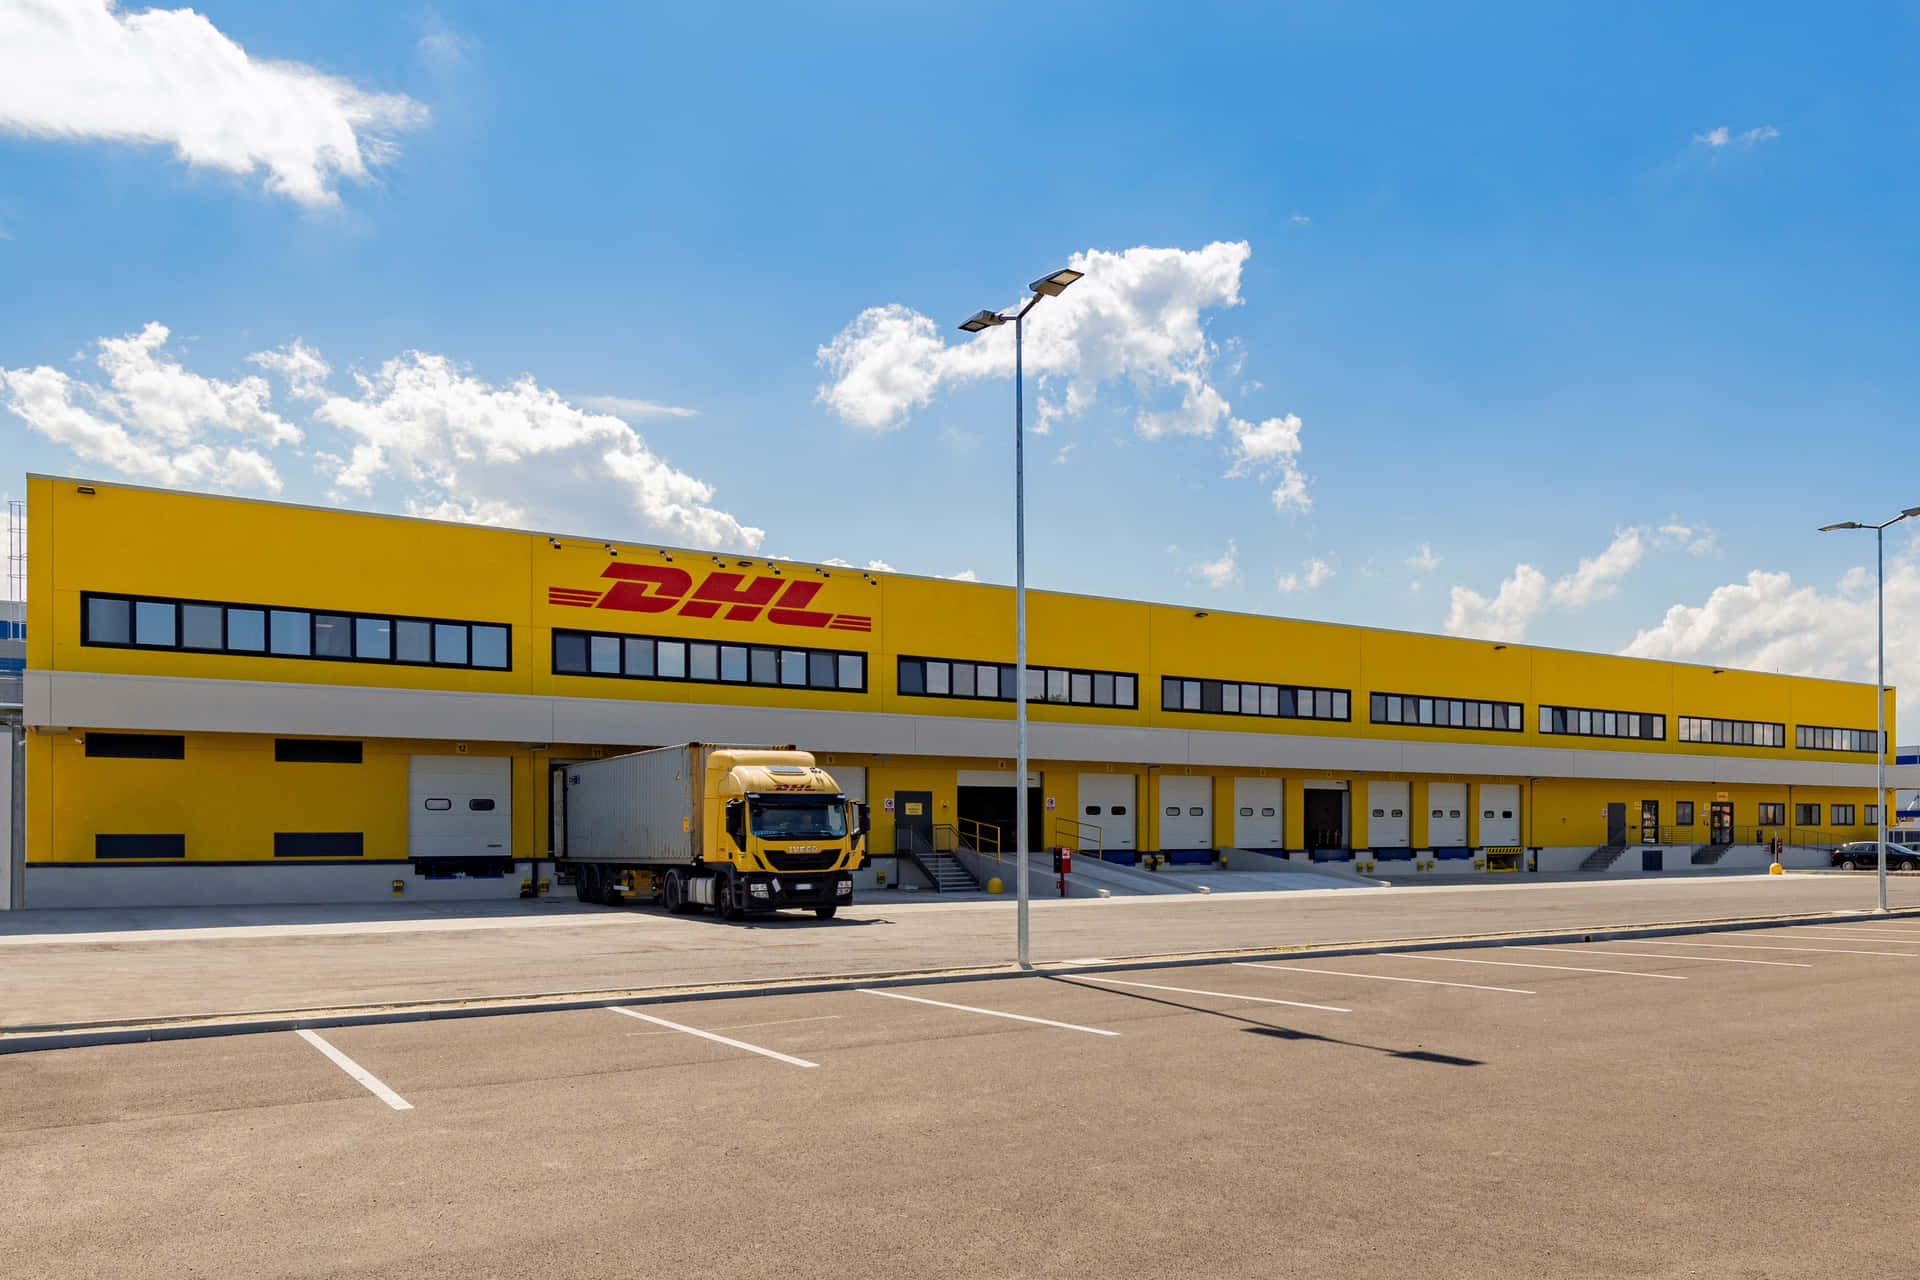 DHL: Your international freight partner